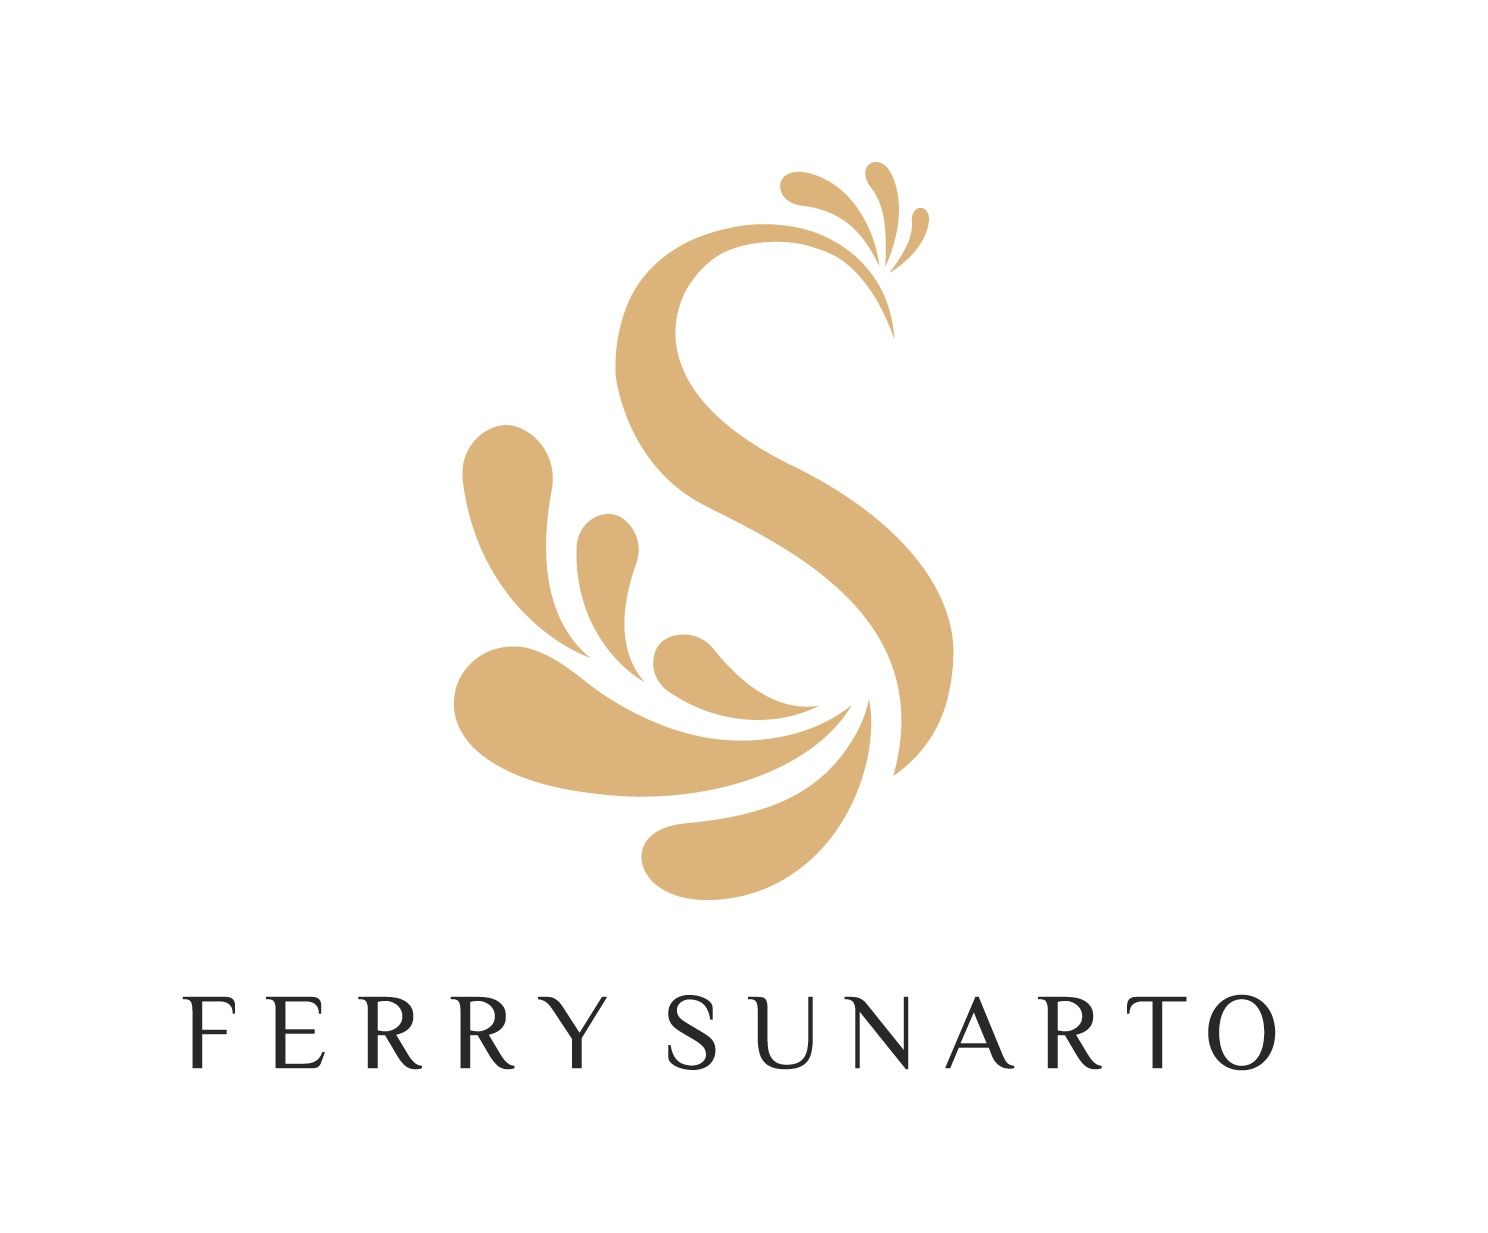 House of Ferry Sunarto